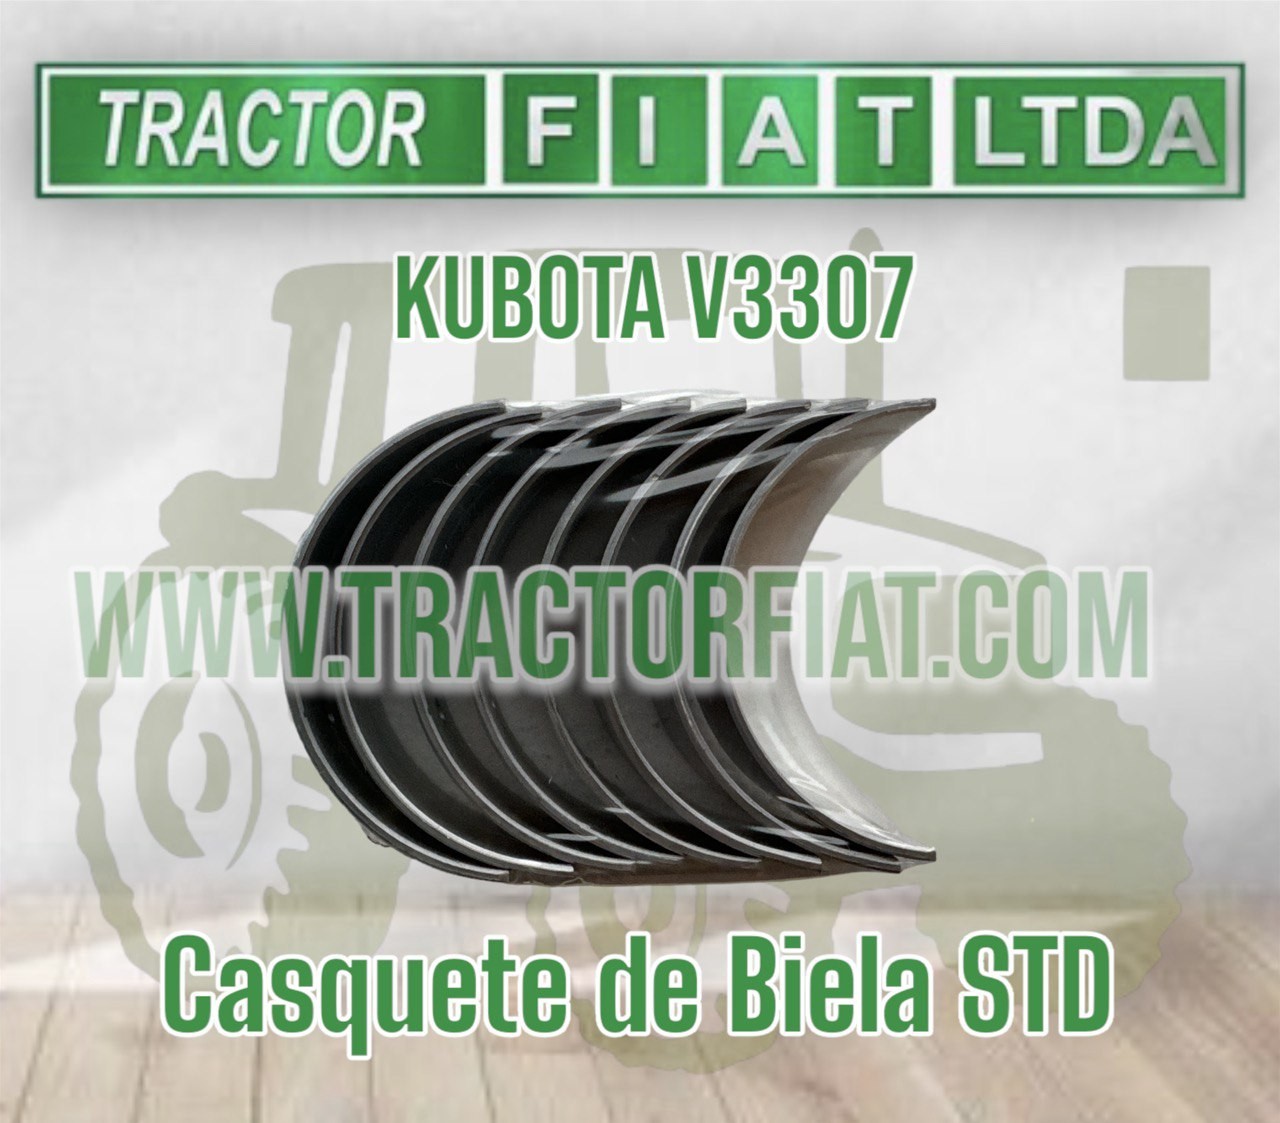 CASQUETES BIELA STD - MOTOR KUBOTA V3307